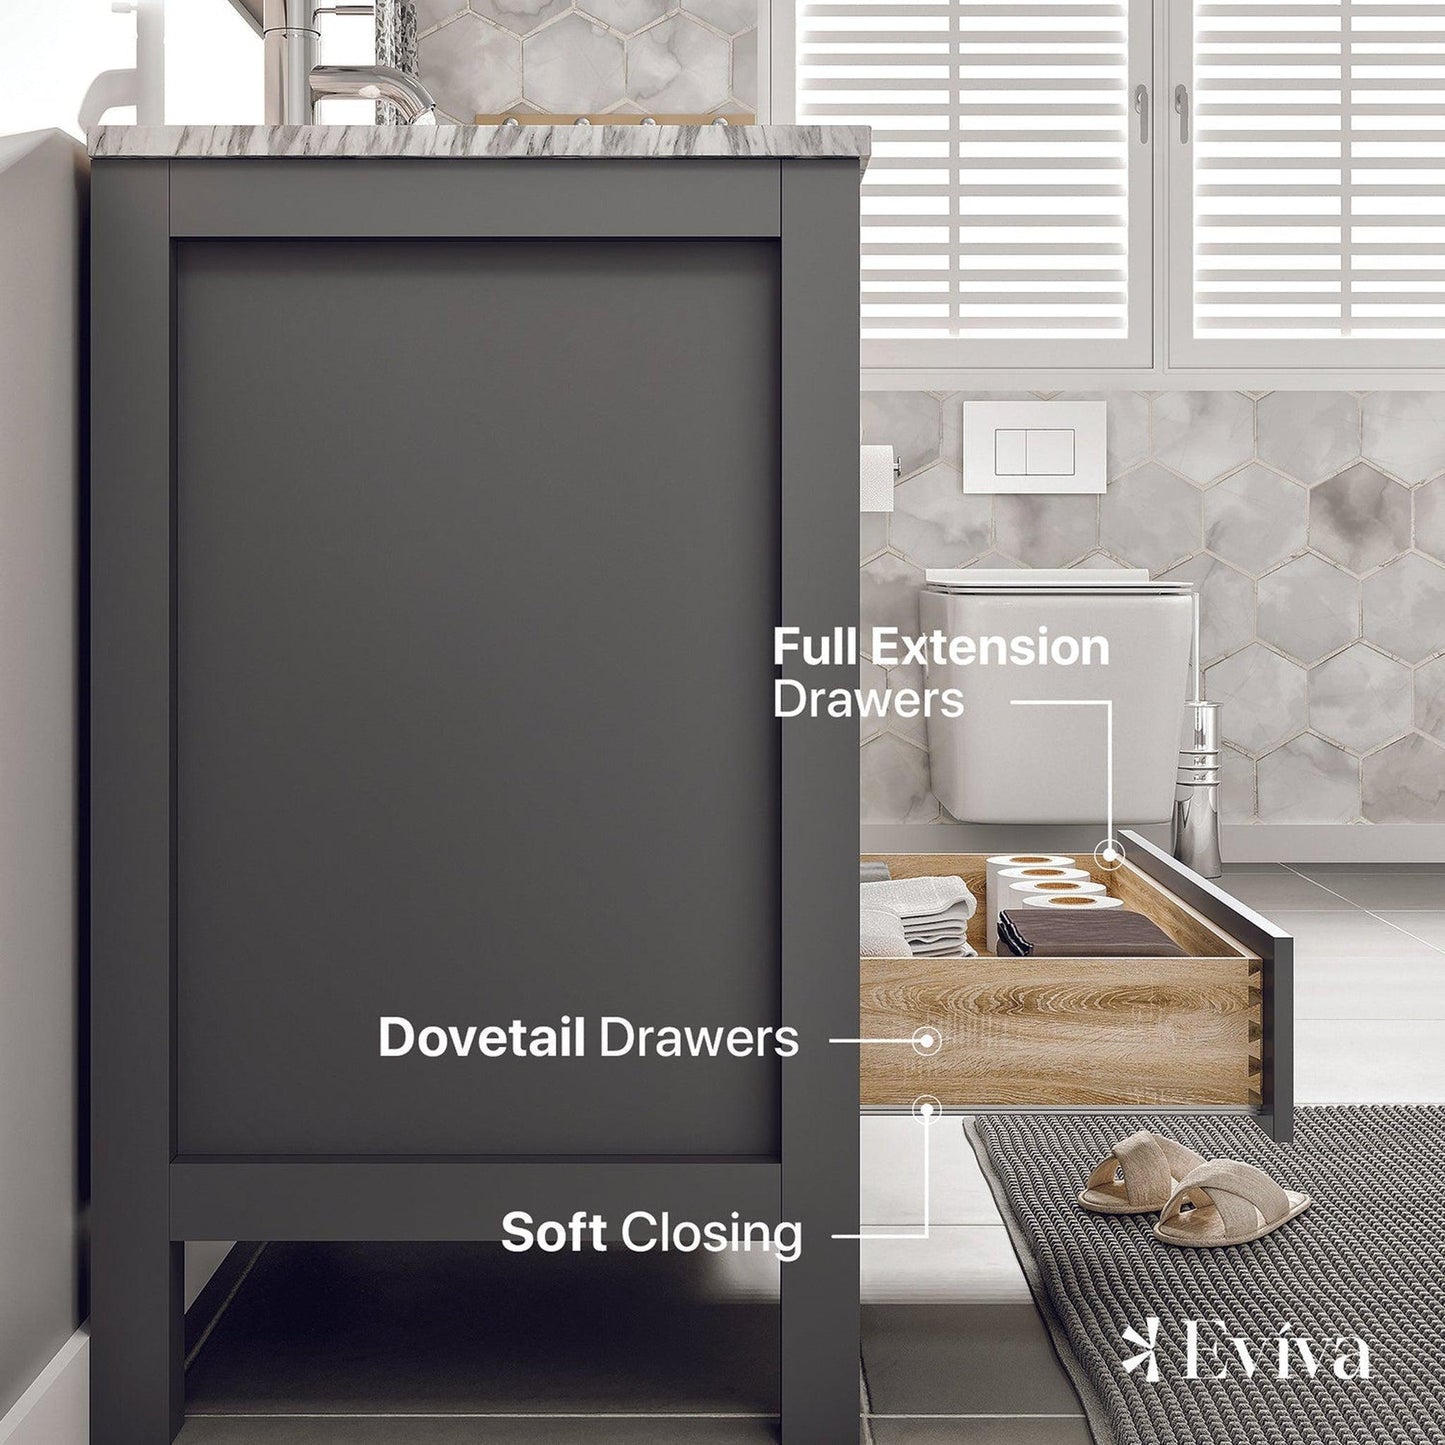 Eviva London 30" x 34" Gray Freestanding Bathroom Vanity With Carrara Marble Countertop and Single Undermount Sink